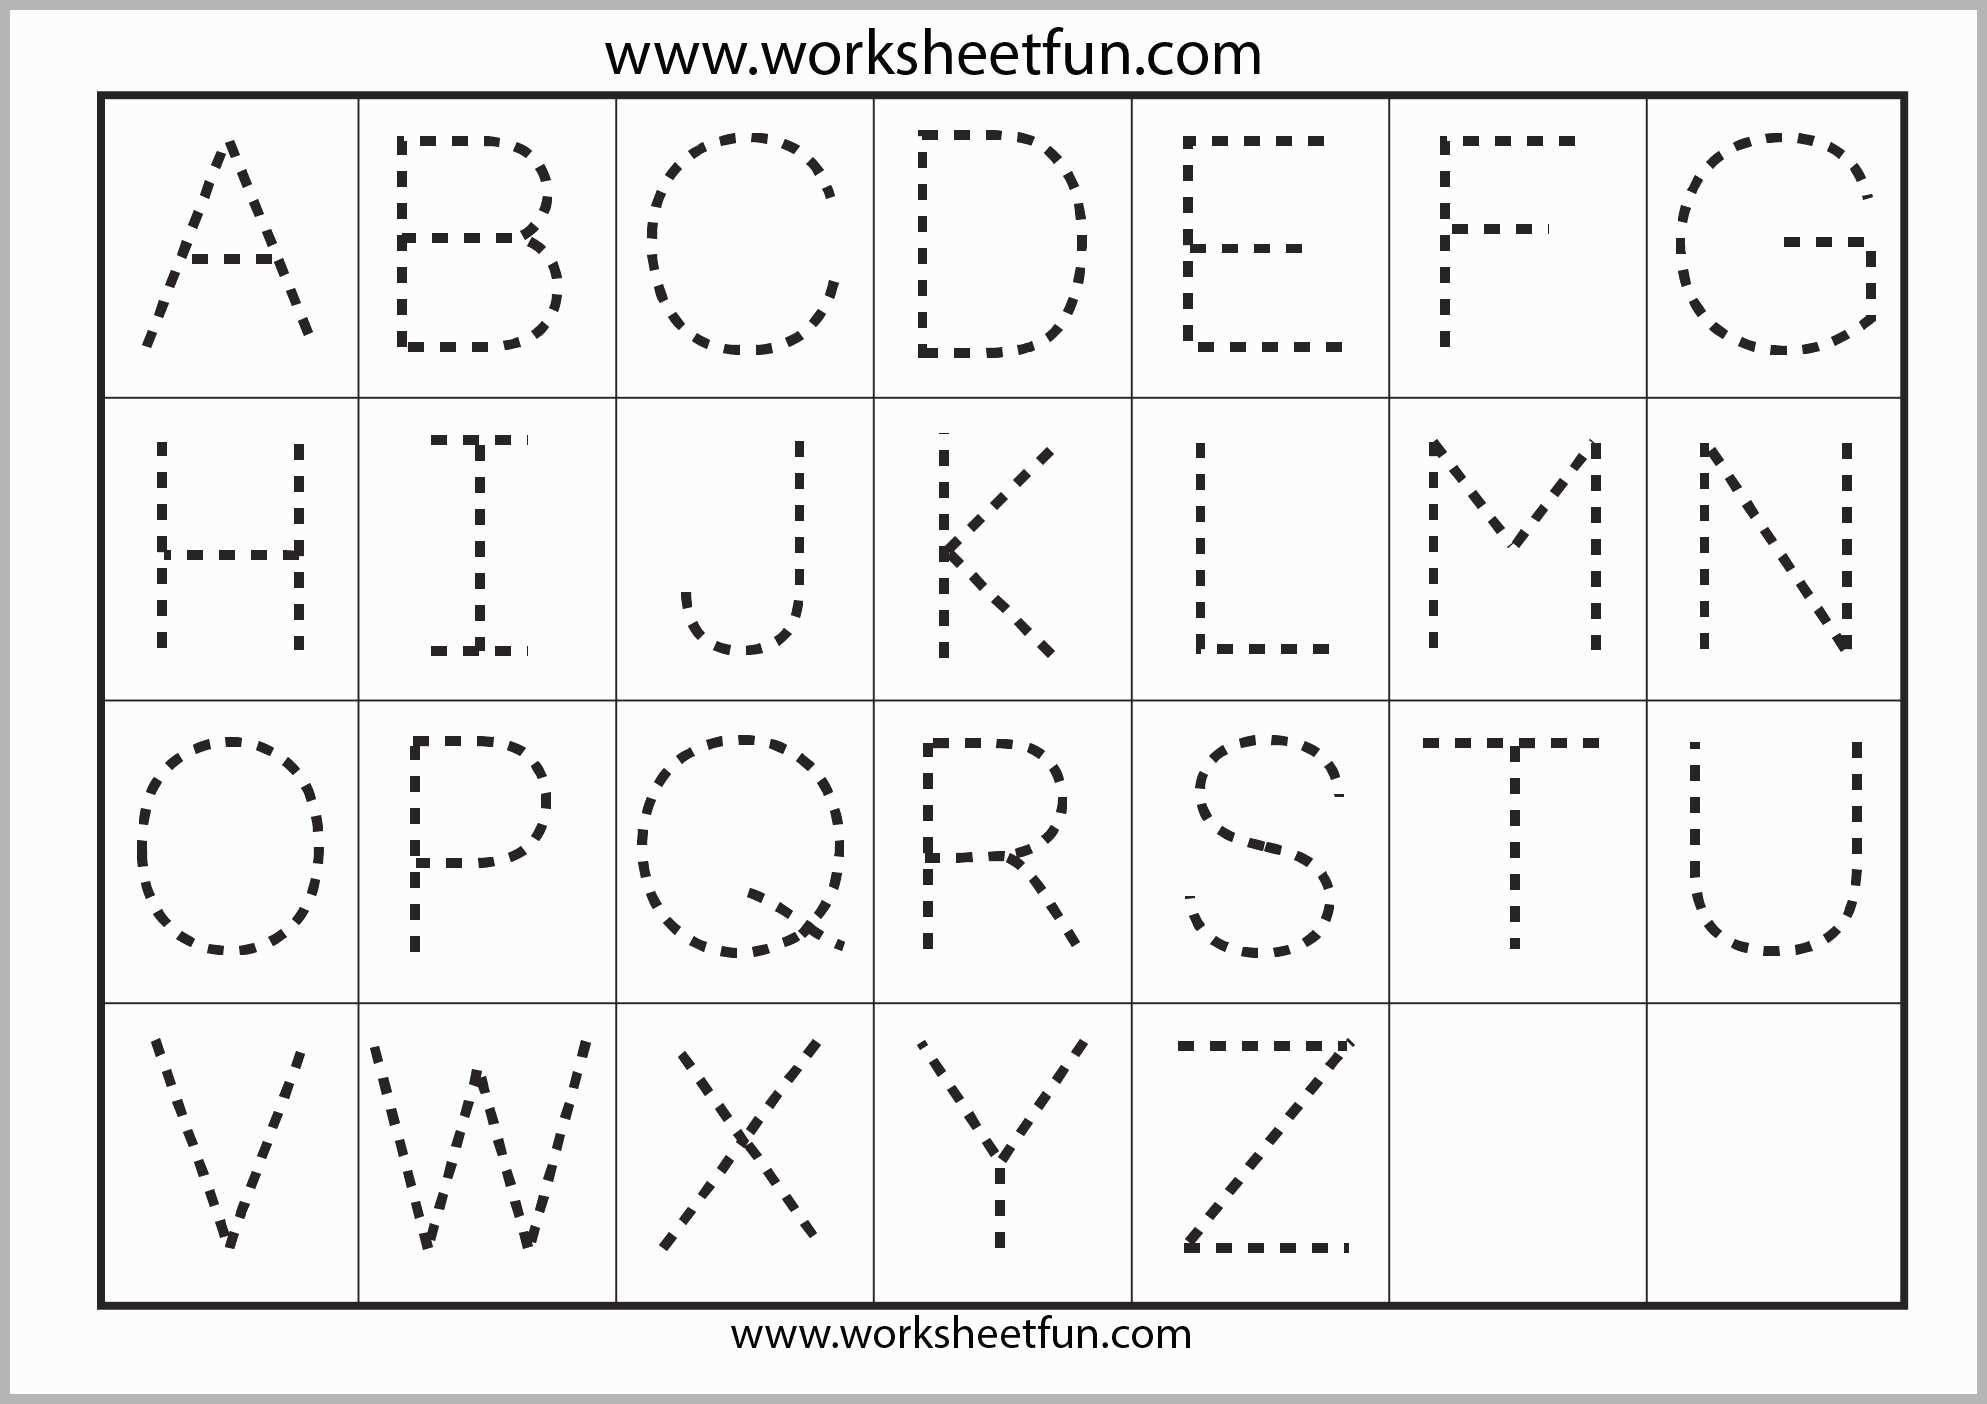 42 Preschool Alphabet Worksheets Pdf In 2020 | Tracing within Alphabet Tracing Worksheets 1-10 Pdf